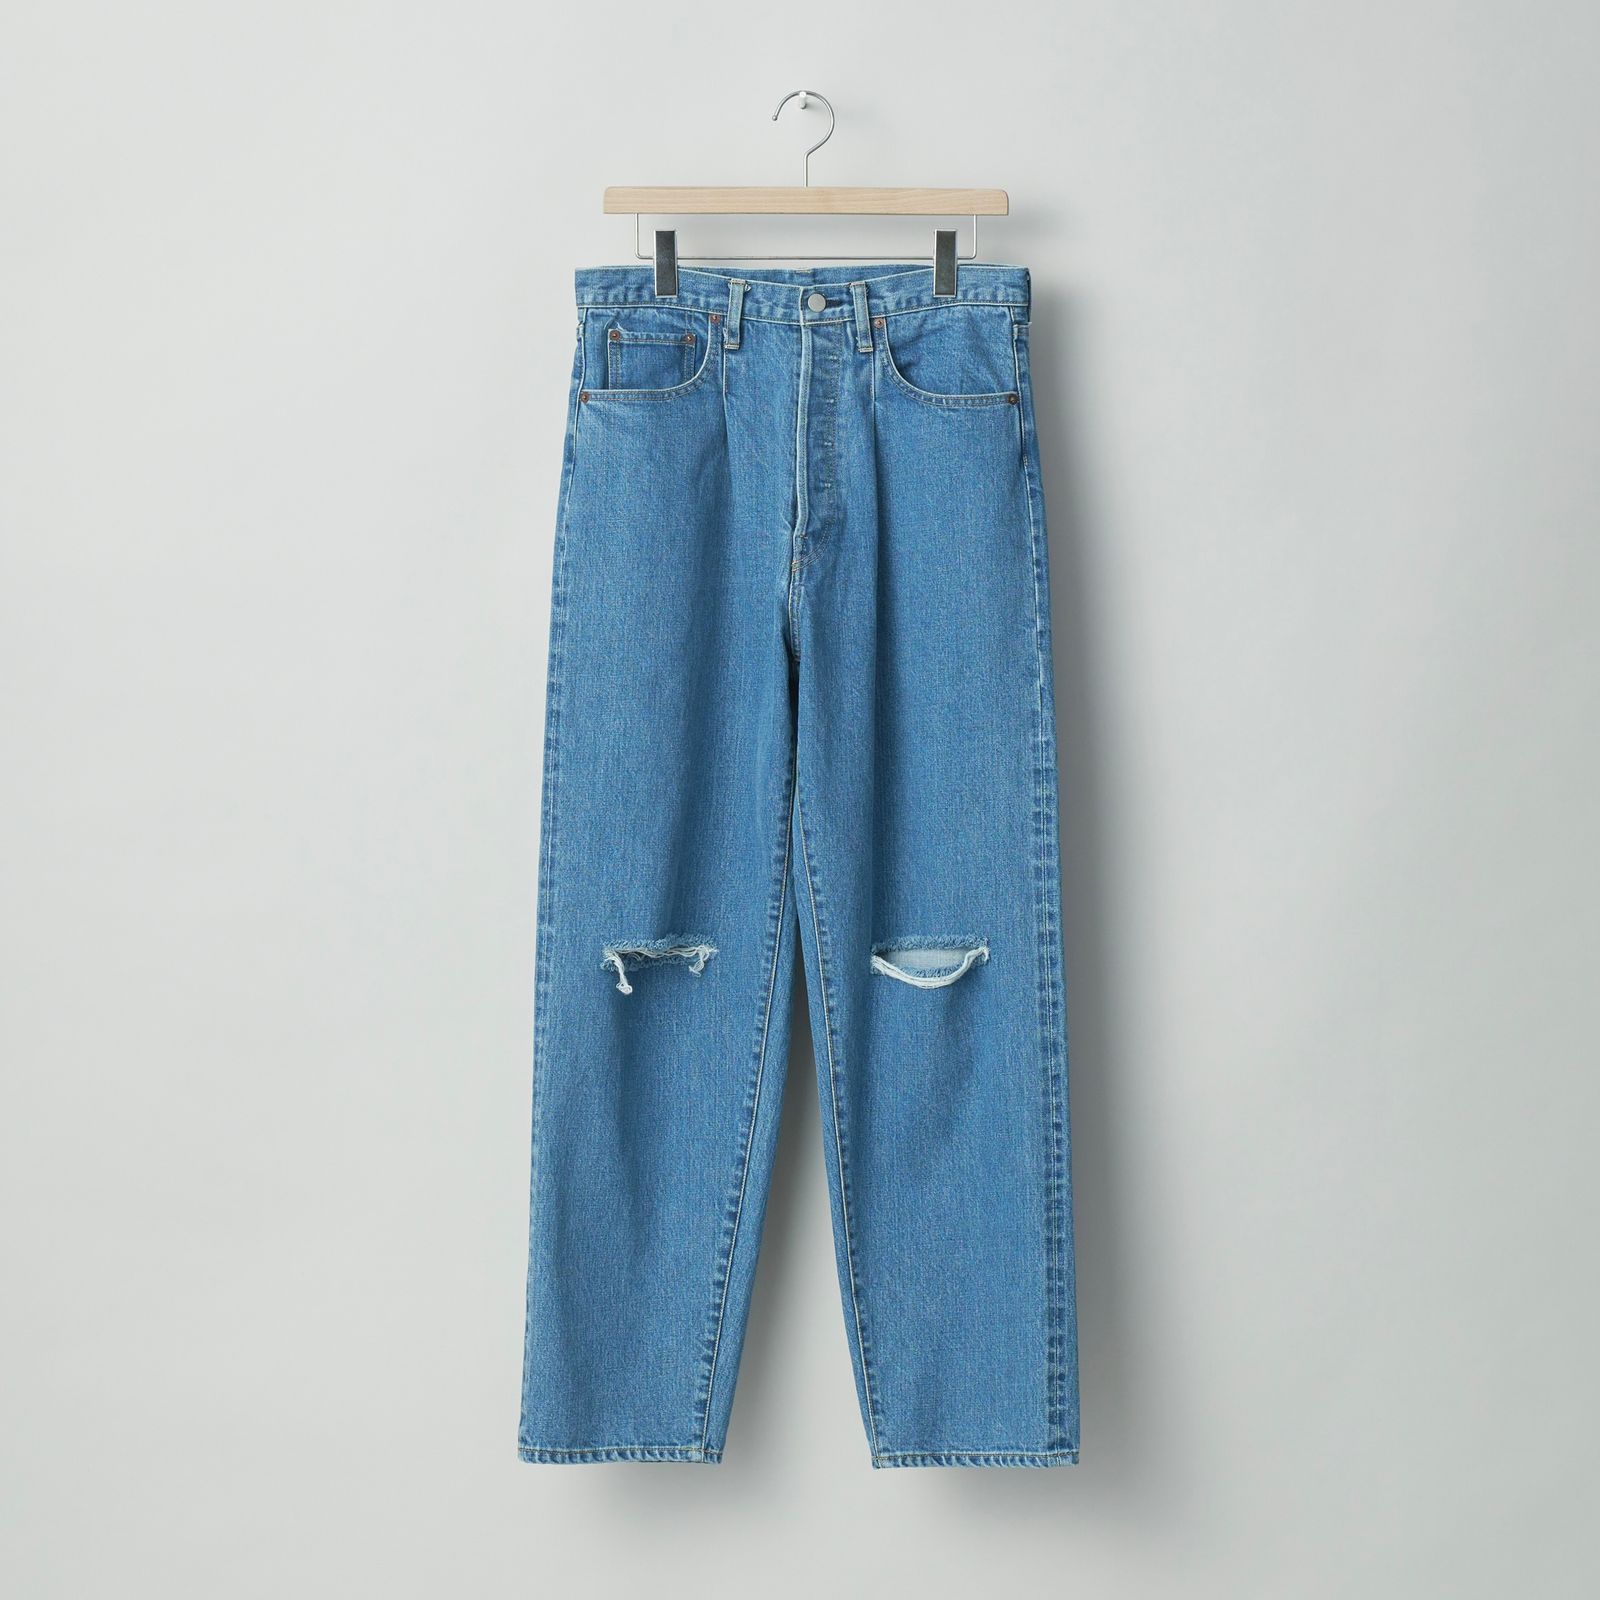 stein - 【残りわずか】Vintage Reproduction Damage Denim Jeans